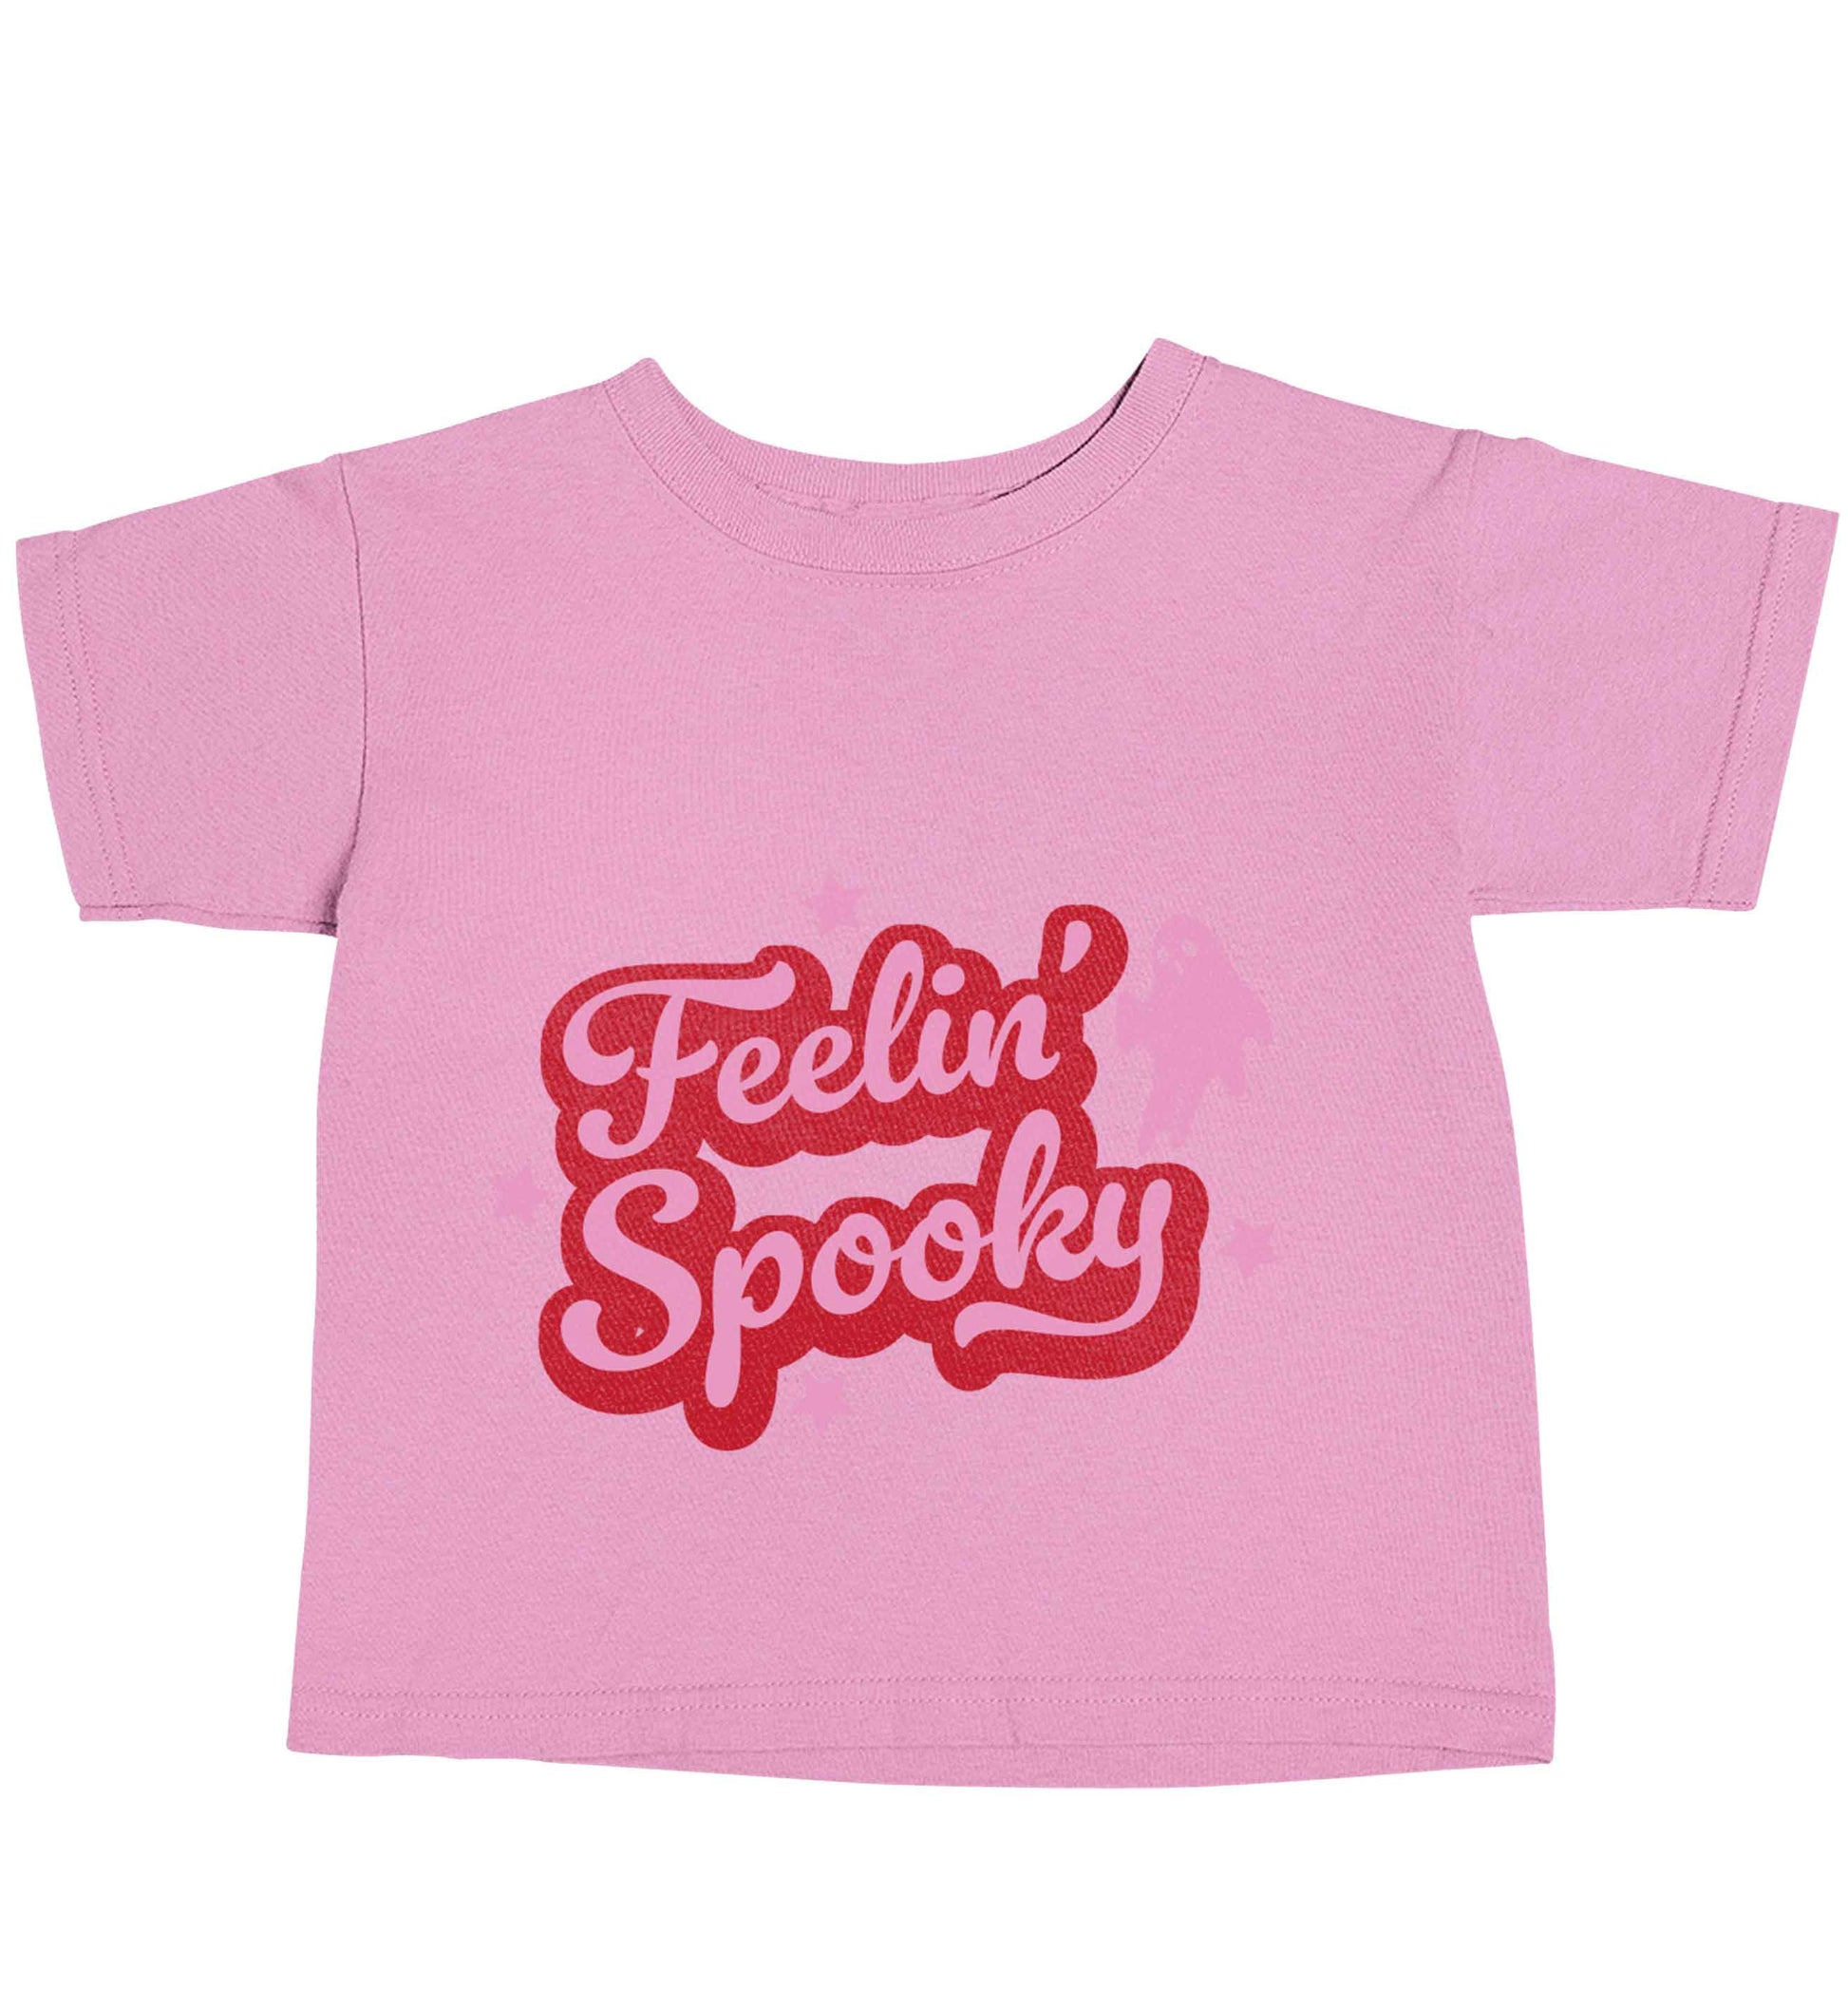 Feelin' Spooky Kit light pink baby toddler Tshirt 2 Years